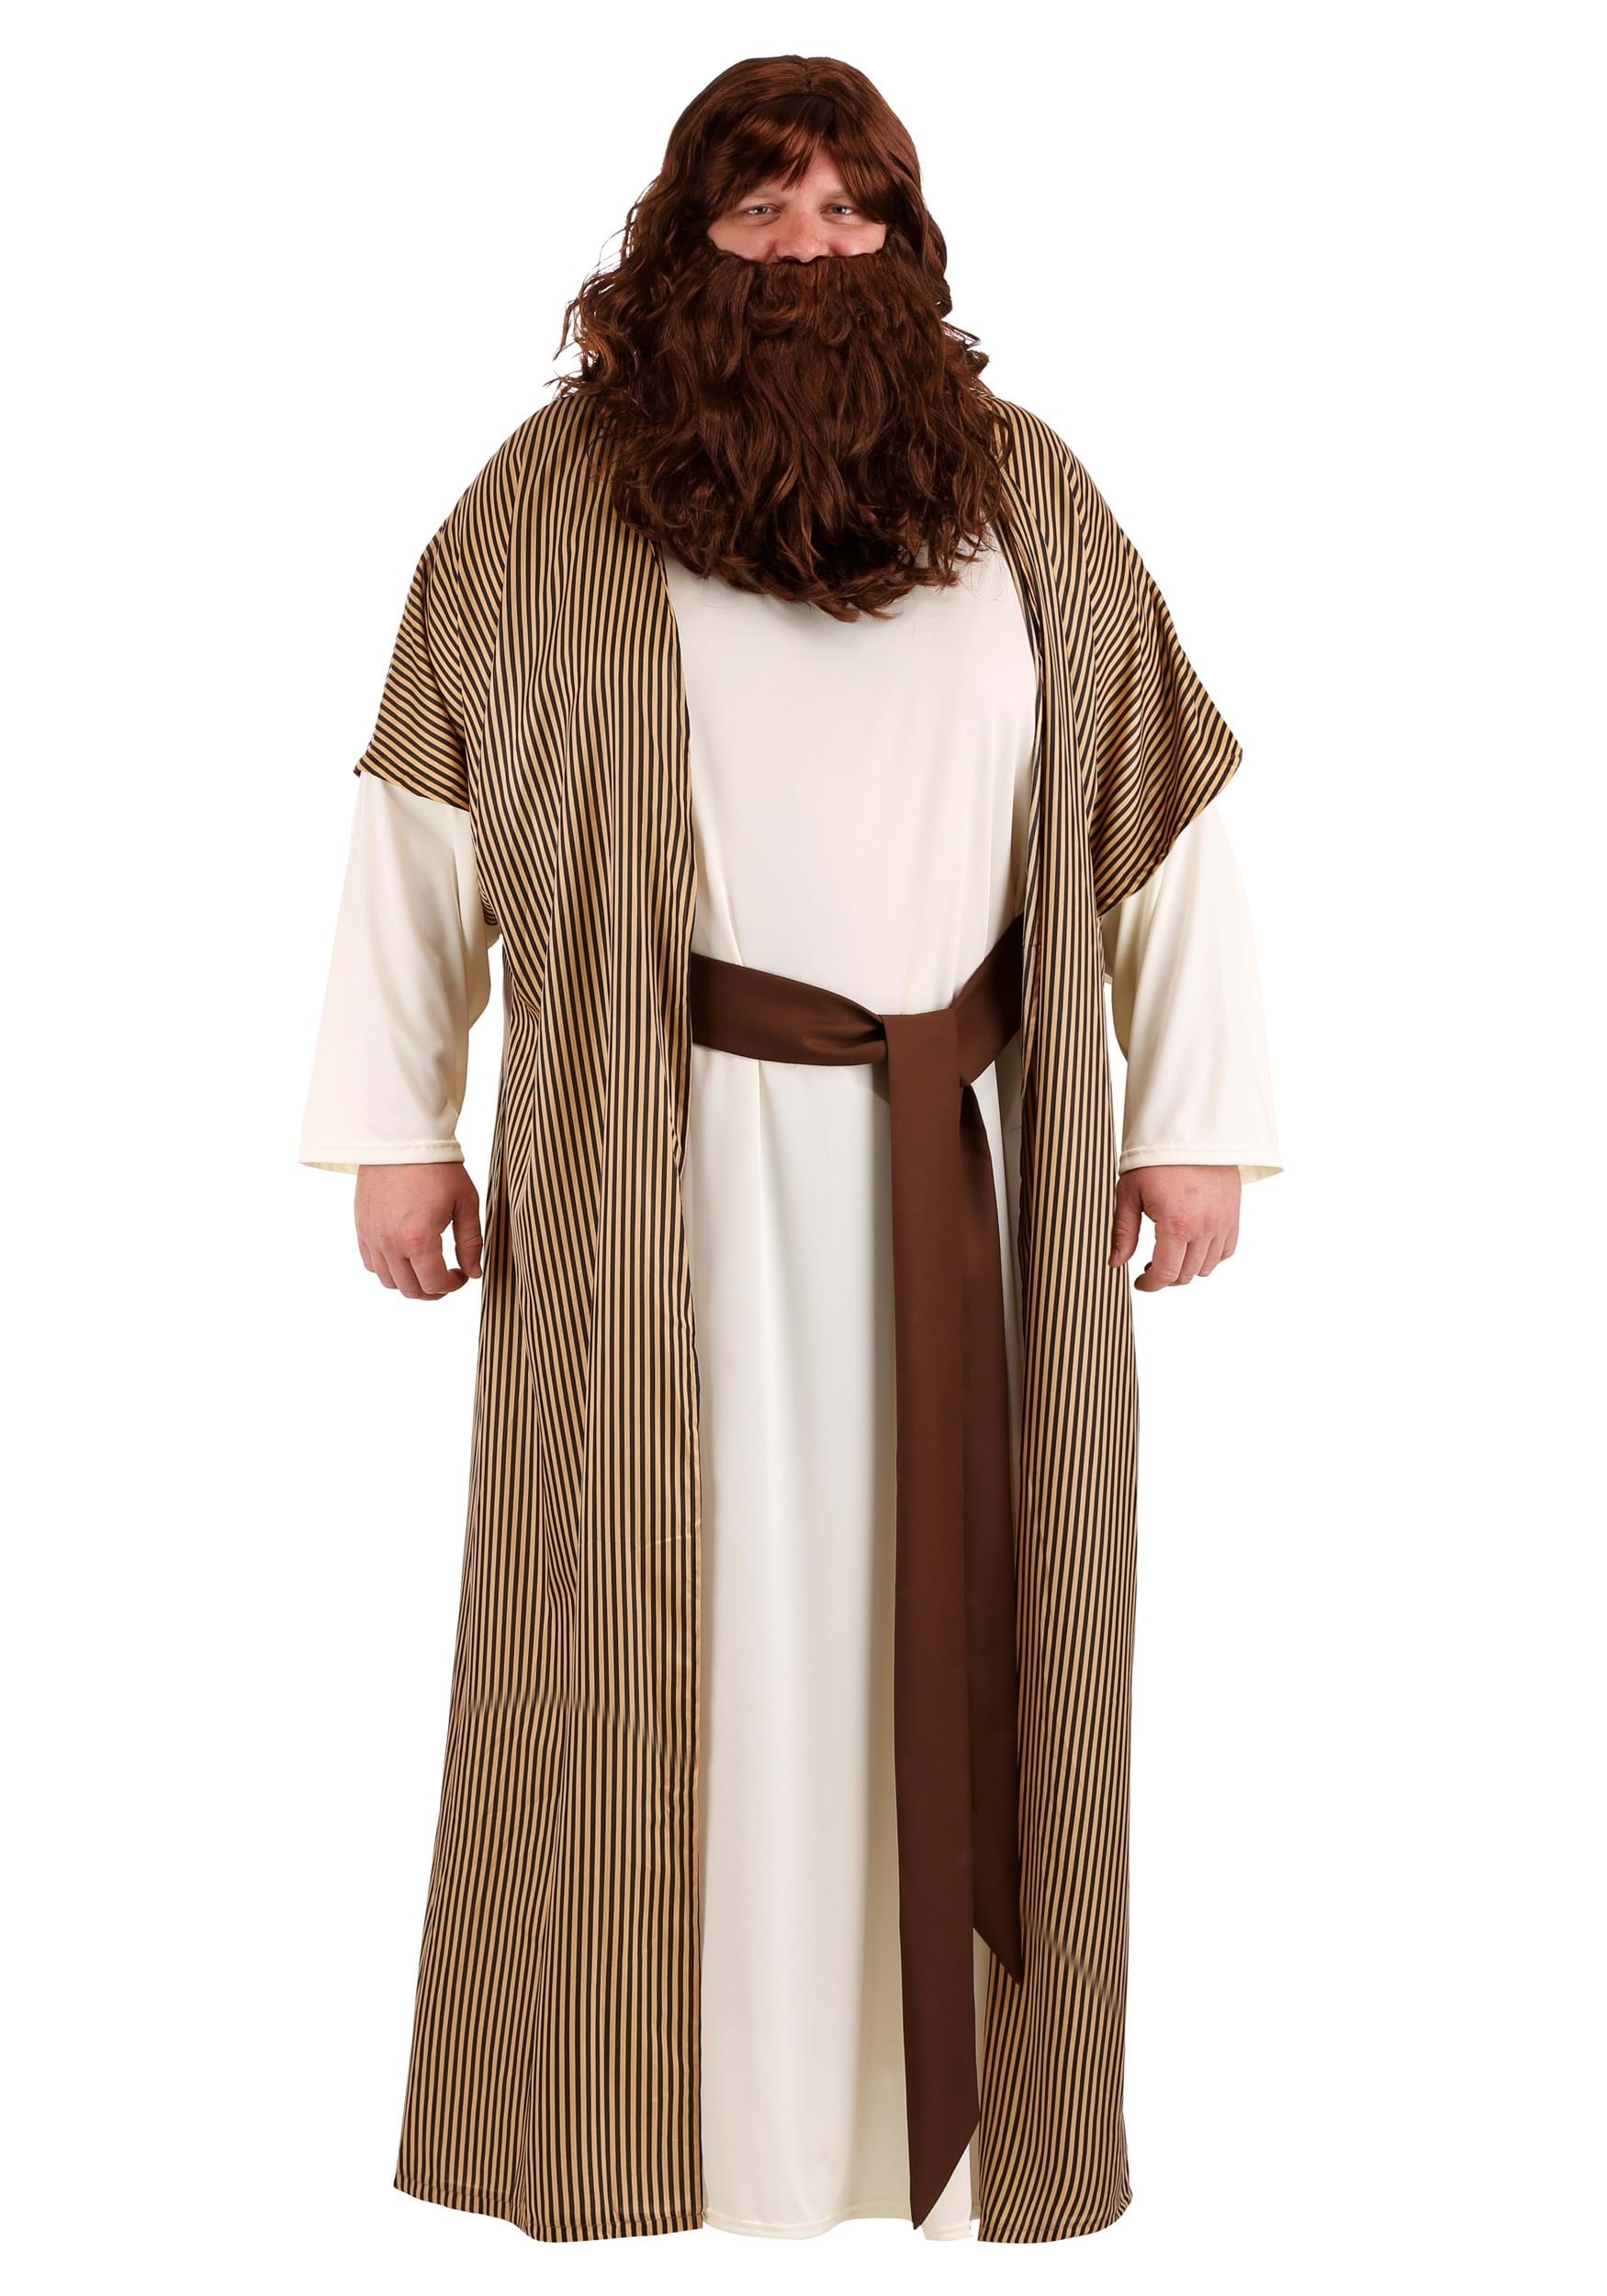 Plus Size Men's Nativity Joseph Fancy Dress Costume